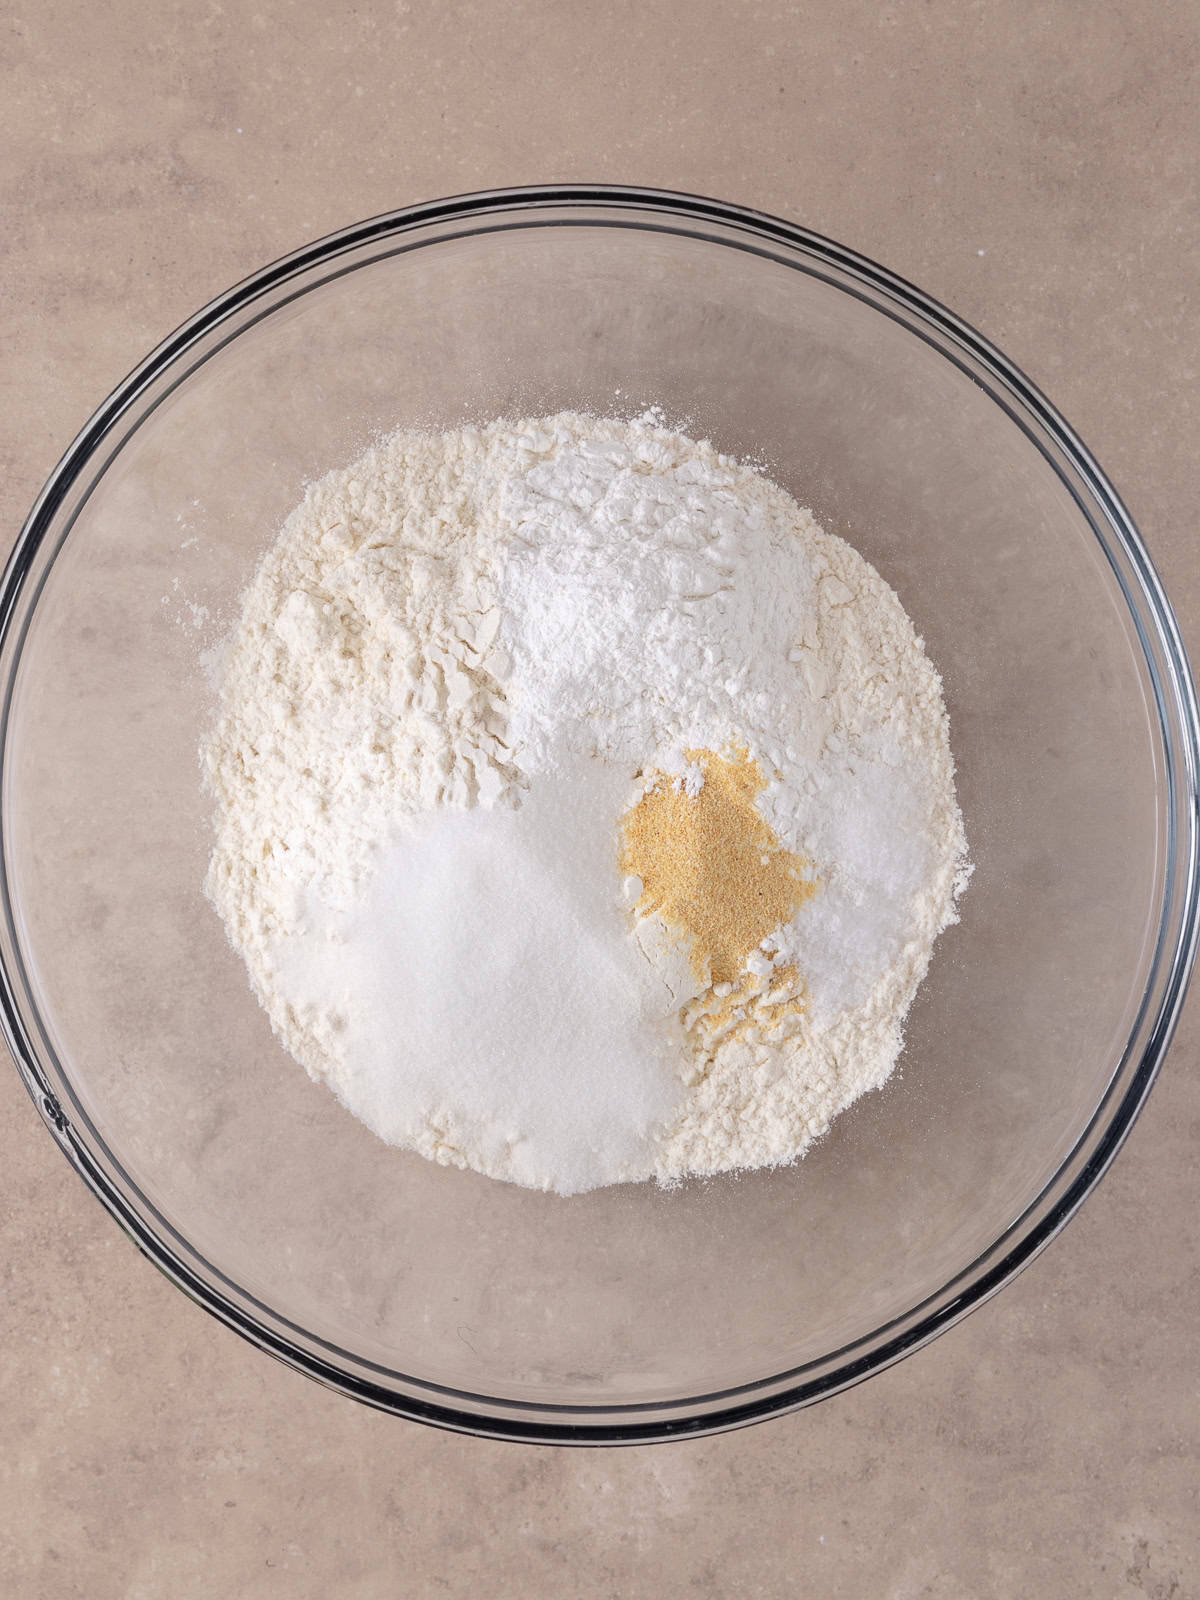 All purpose flour, sugar, baking powder, garlic powder, and salt are in a large glass bowl.